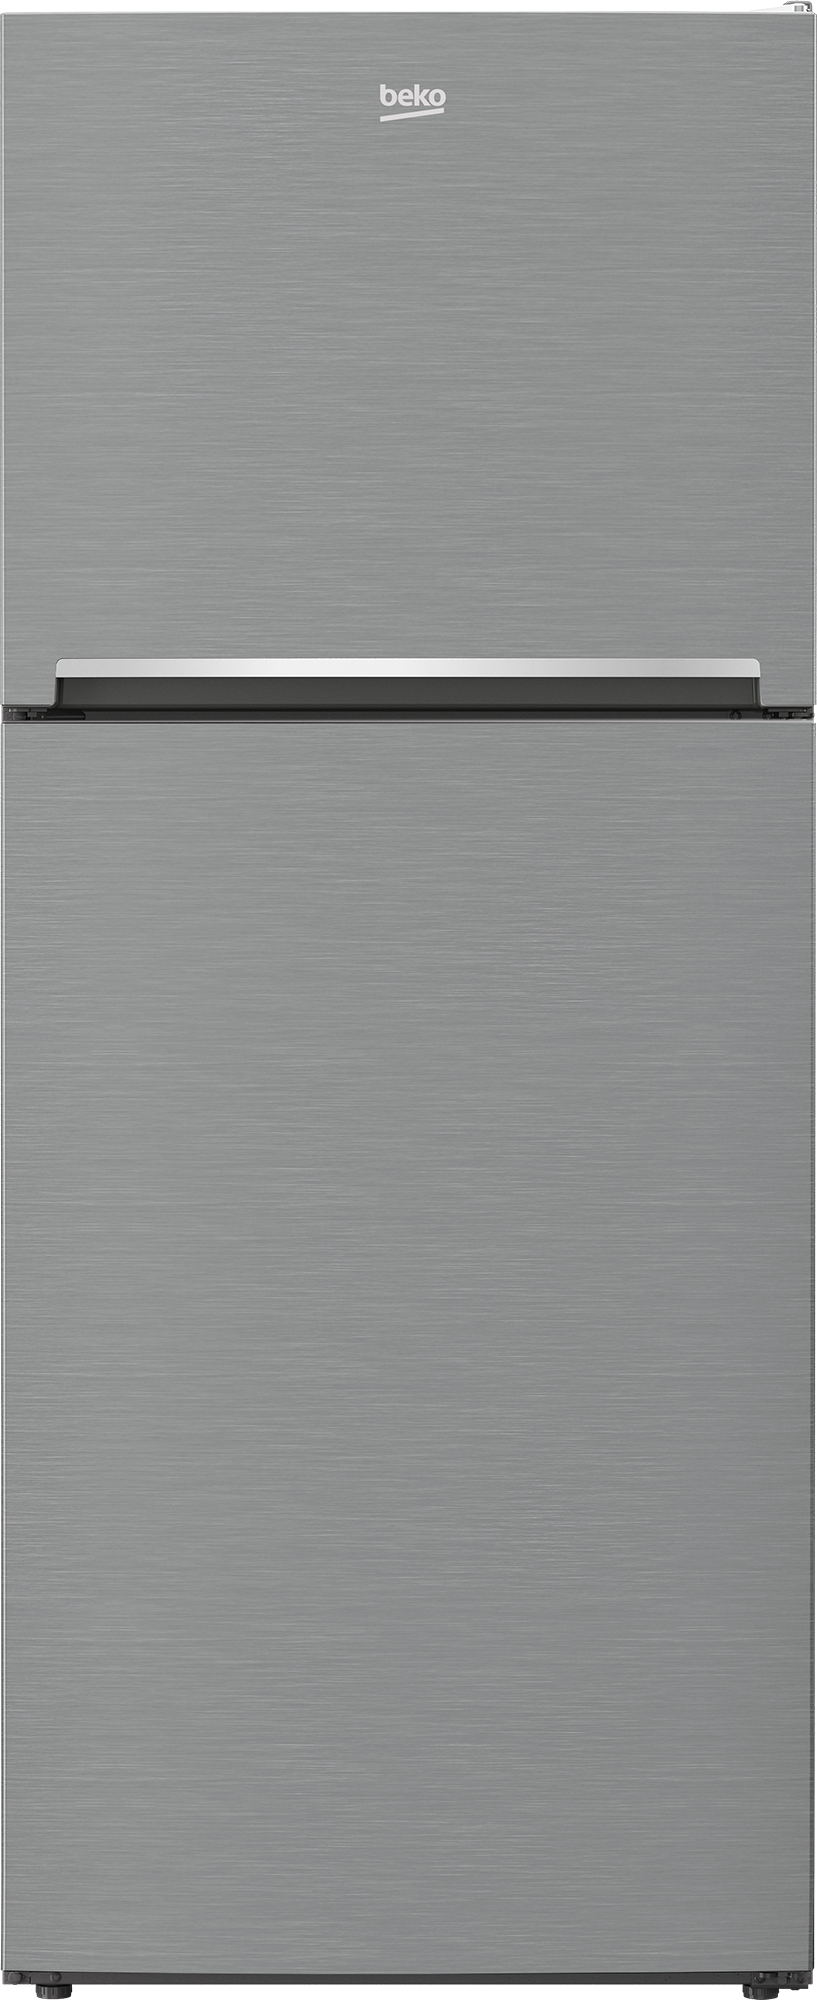 Beko 13.5 Cu. Ft. Fingerprint-free Stainless Steel Counter Depth Top Freezer Refrigerator